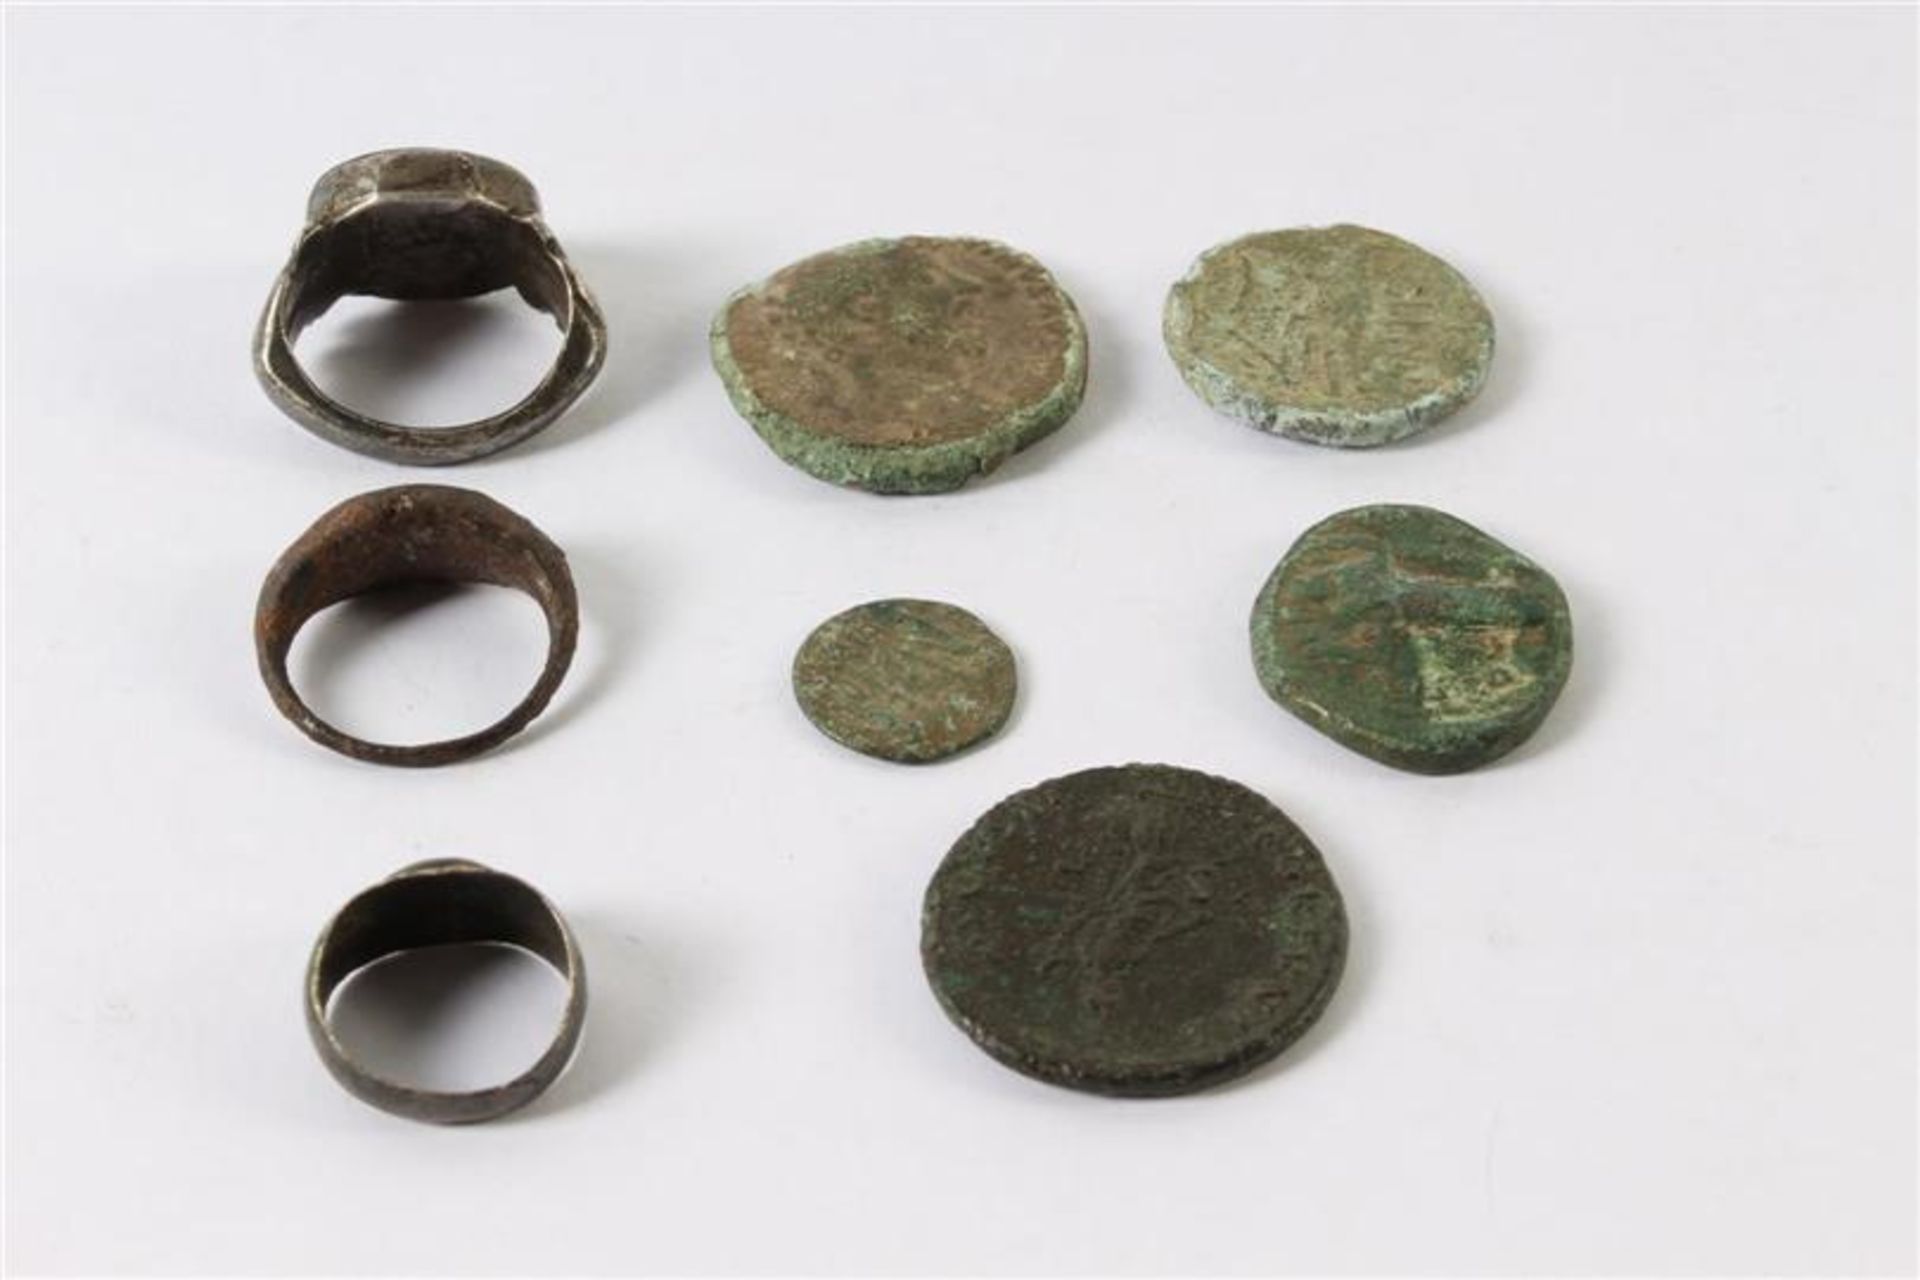 Drie zegelringen. Toegevoegd vijf Romeinse munten.